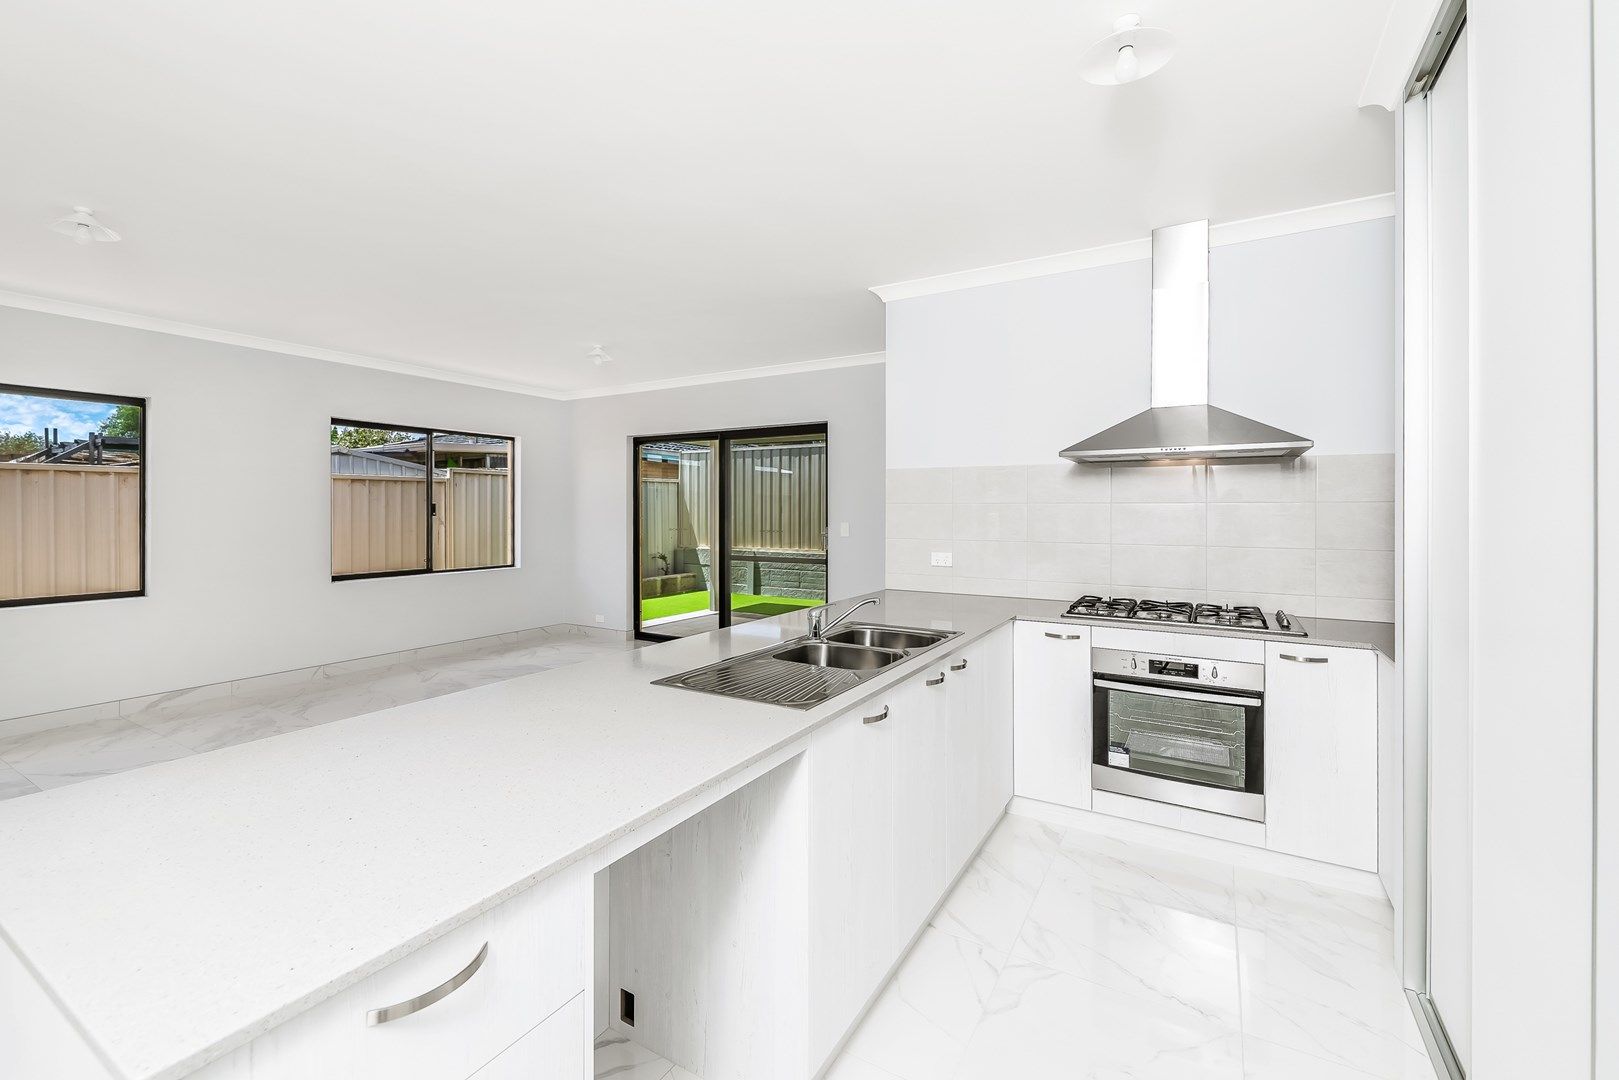 4 bedrooms Apartment / Unit / Flat in 1003B Wanneroo Road WANNEROO WA, 6065